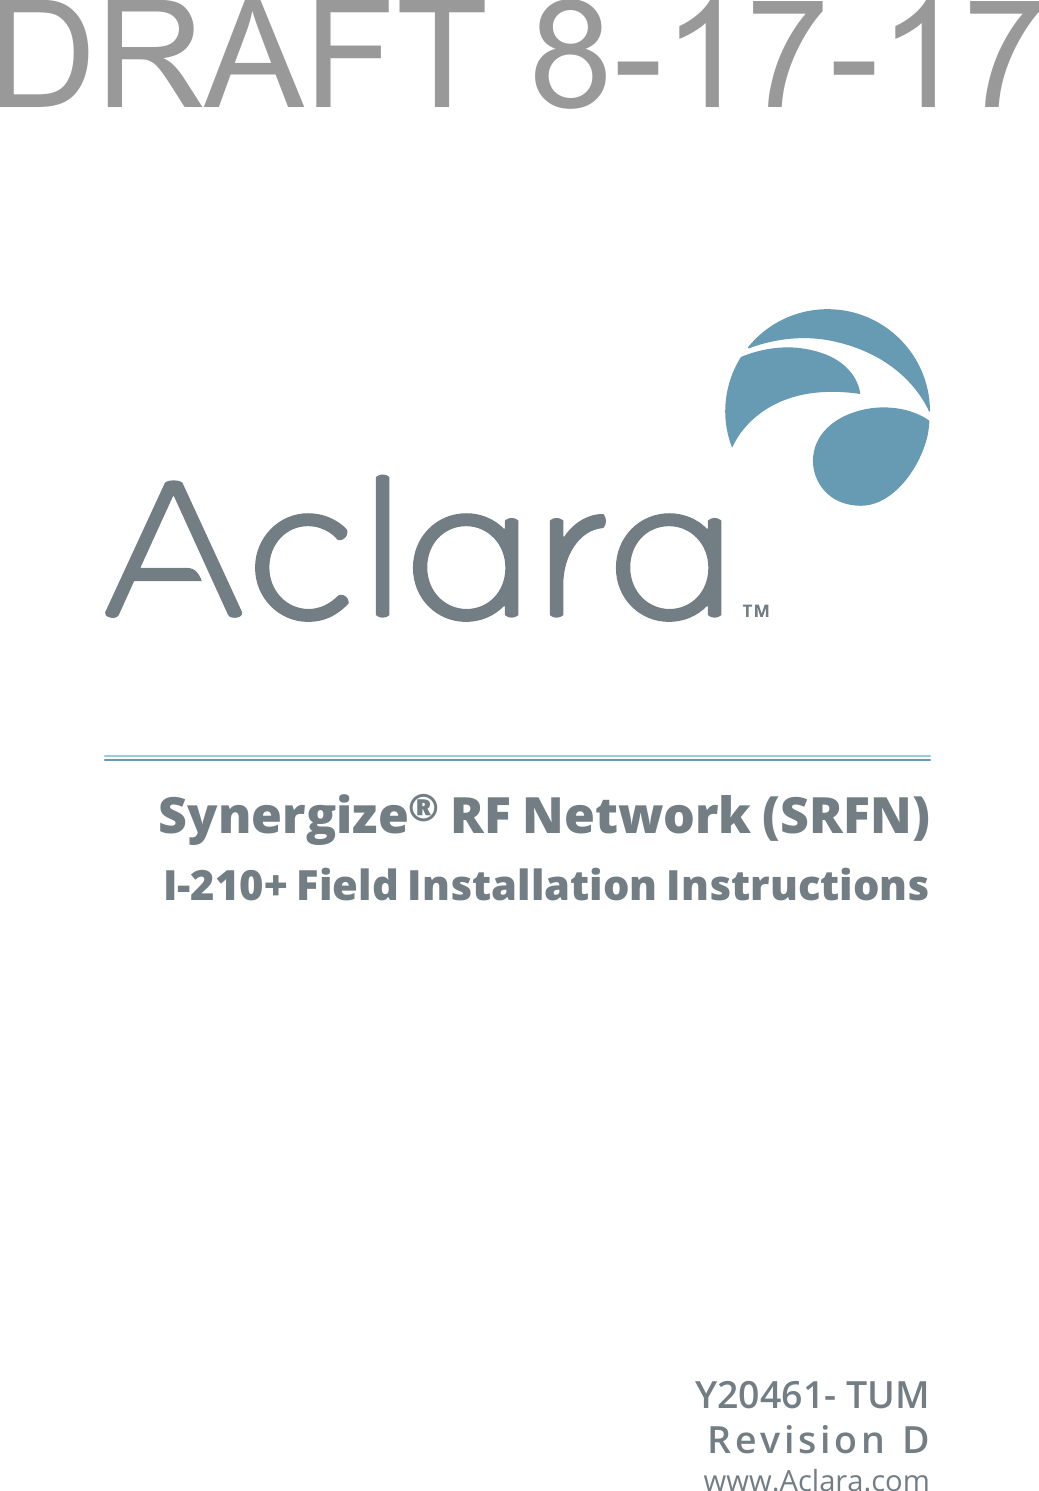 Synergize® RF Network (SRFN) I-210+ Field Installation InstructionsY20461- TUMRevision Dwww.Aclara.comDRAFT 8-17-17